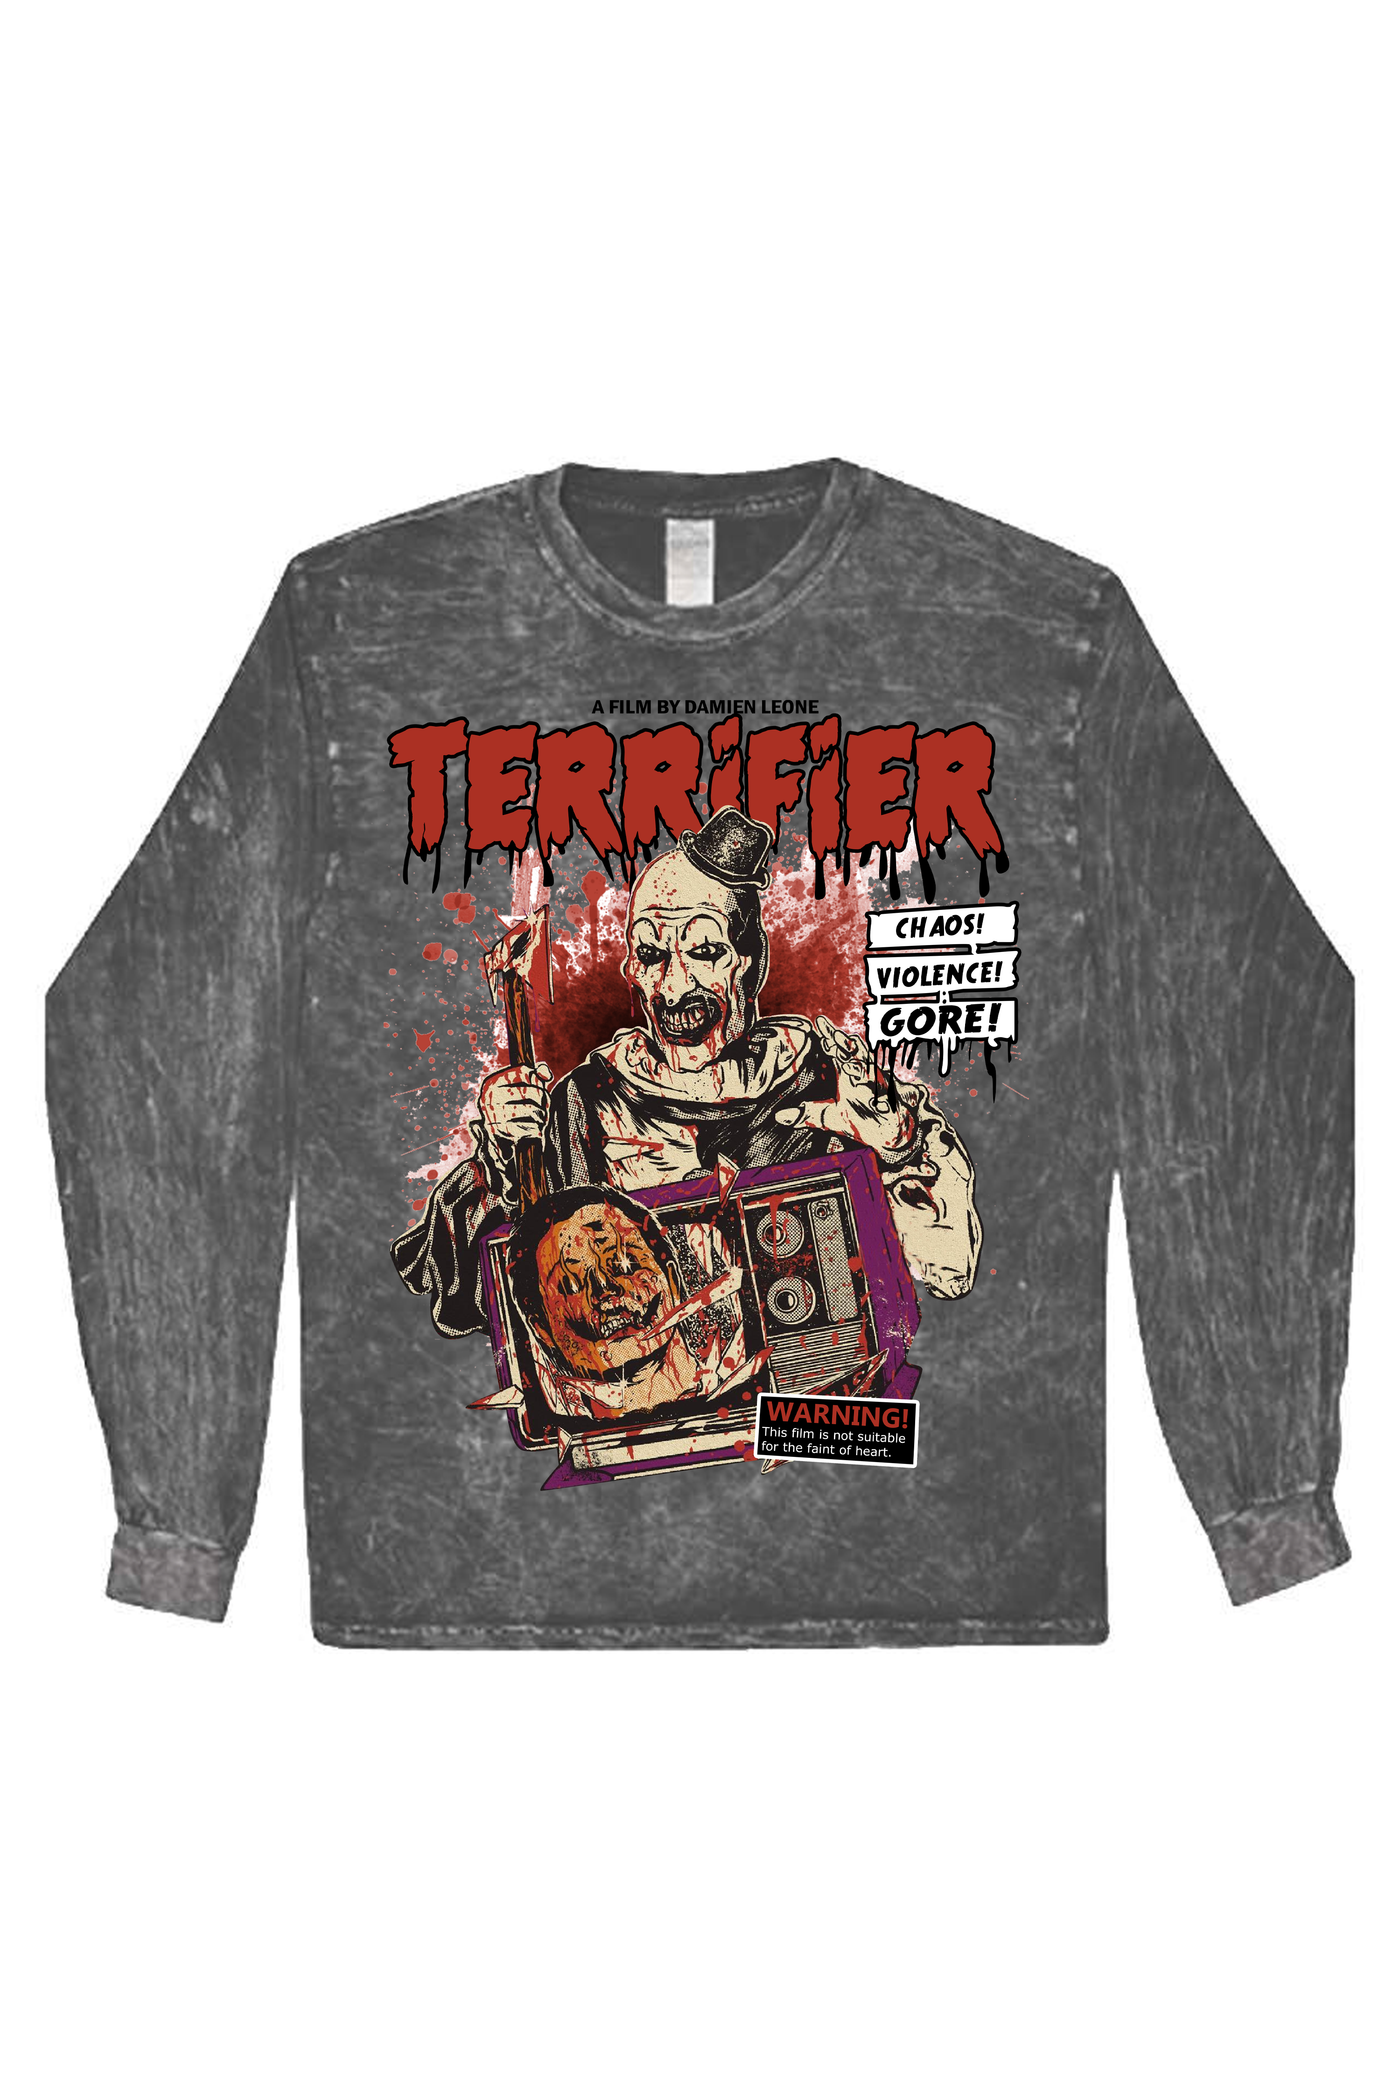 The Terrifier Tee/Sweatshirt